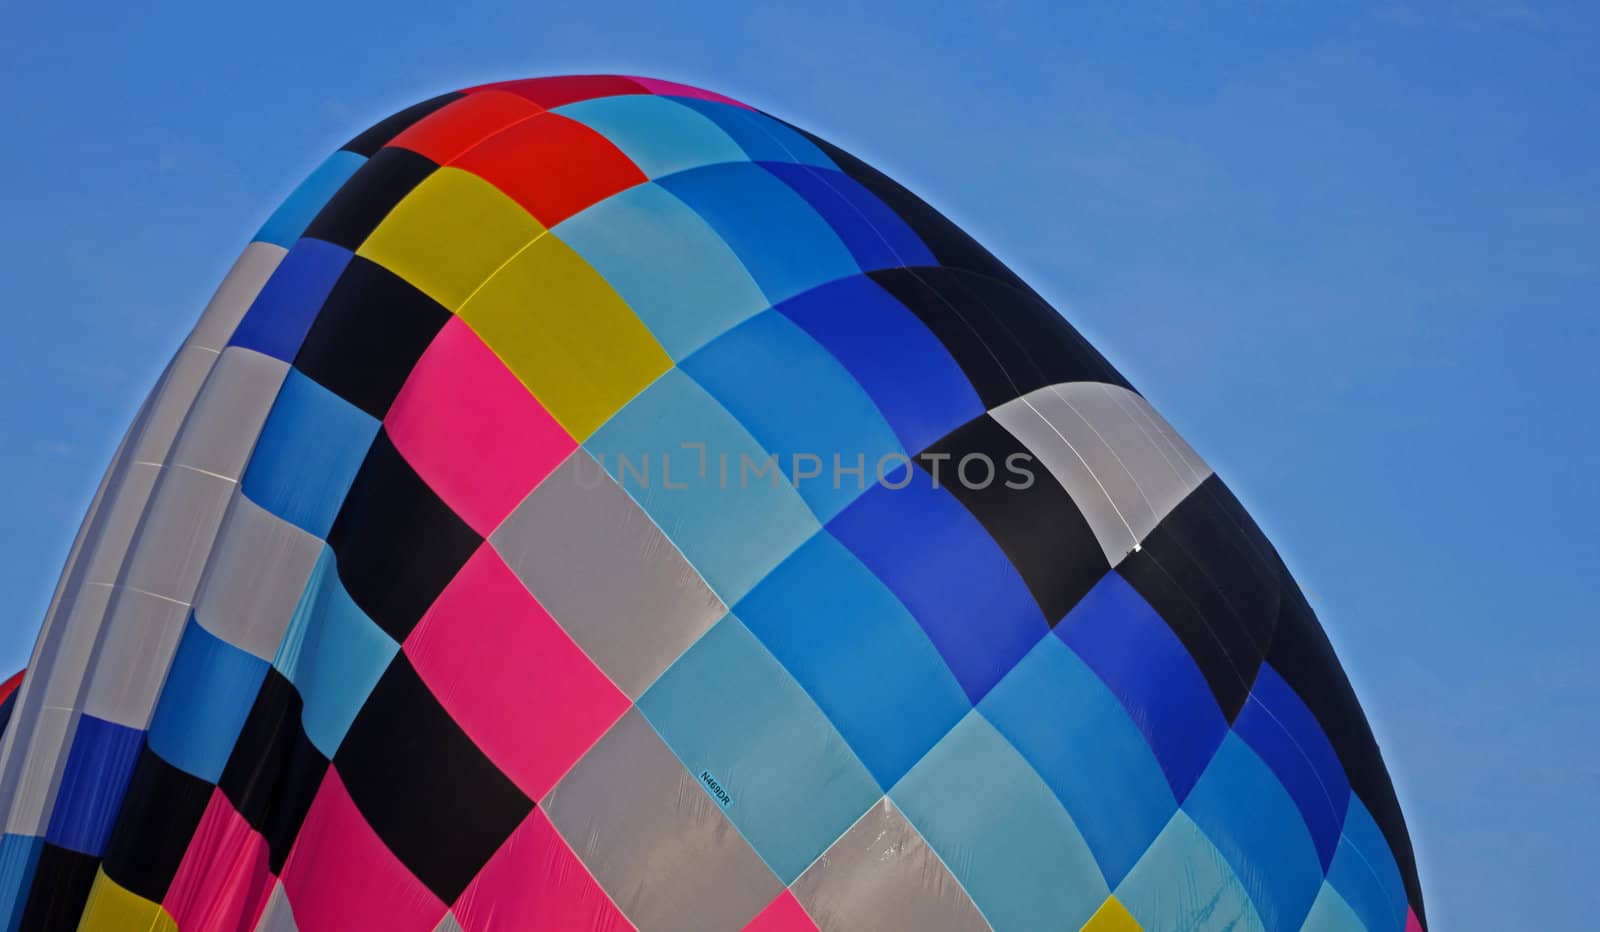 Hot air balloon top2 by dbriyul